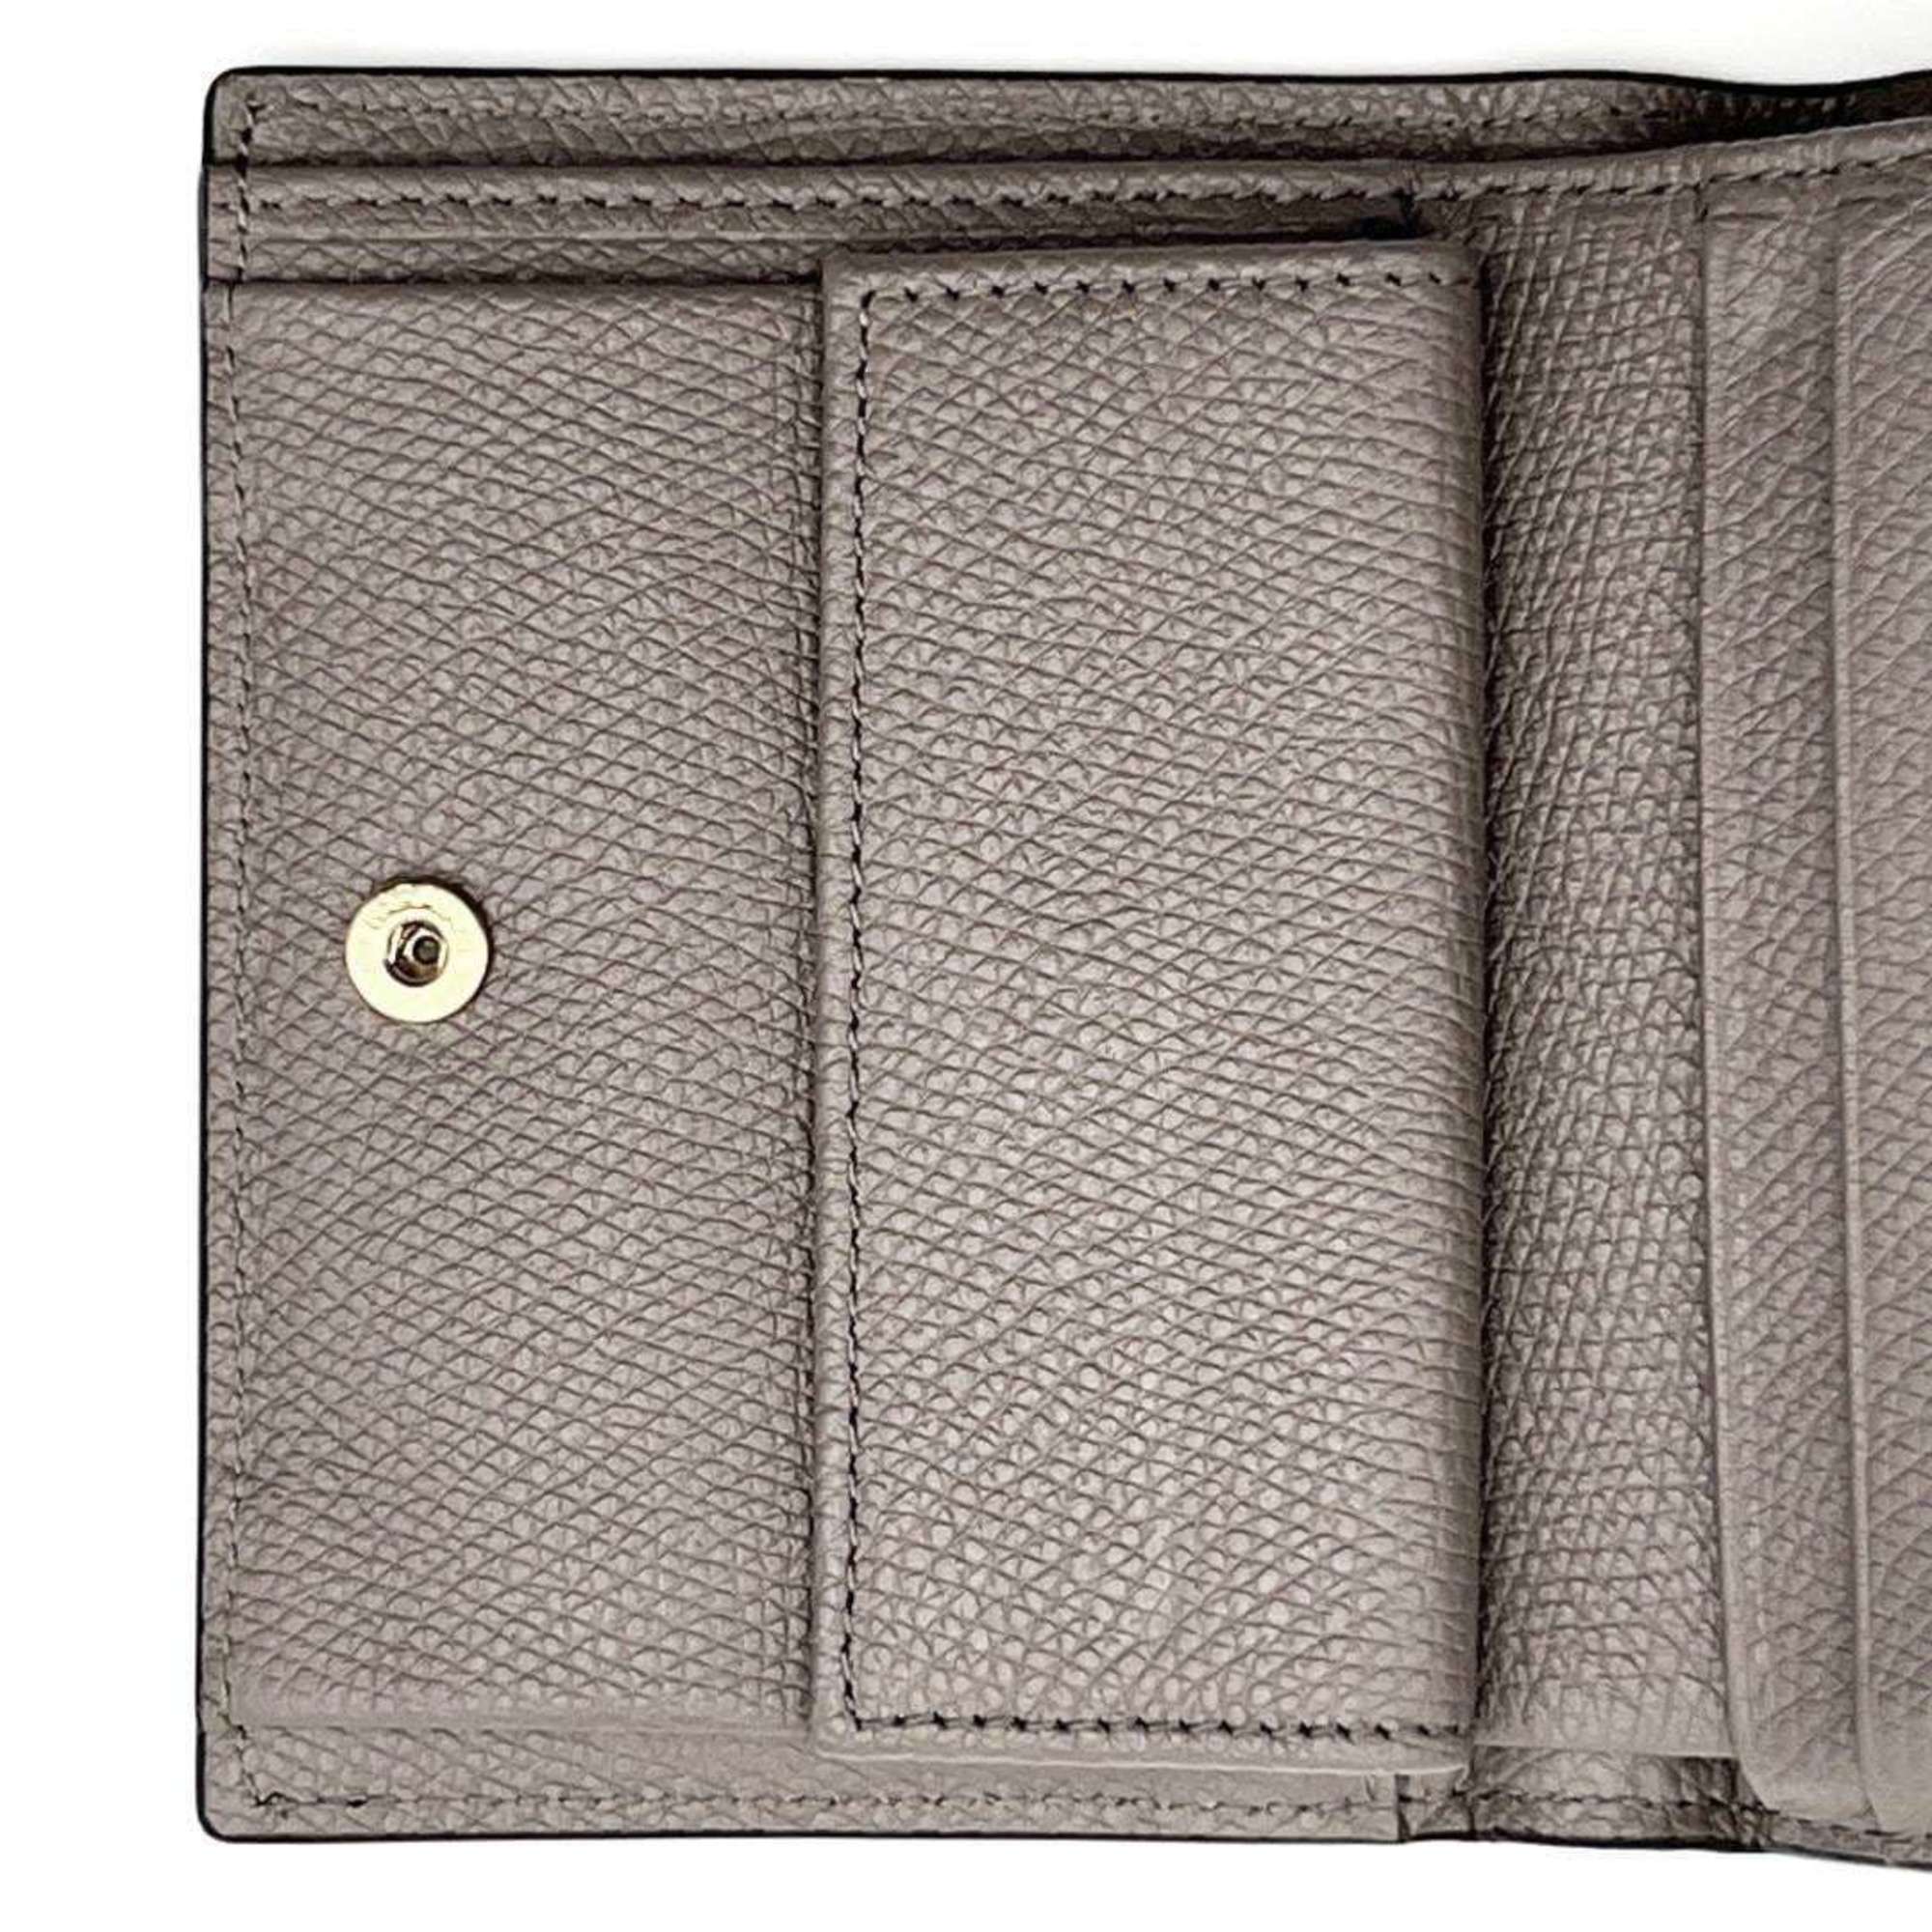 Valentino VALENTINO Women's Wallet Bi-fold Compact